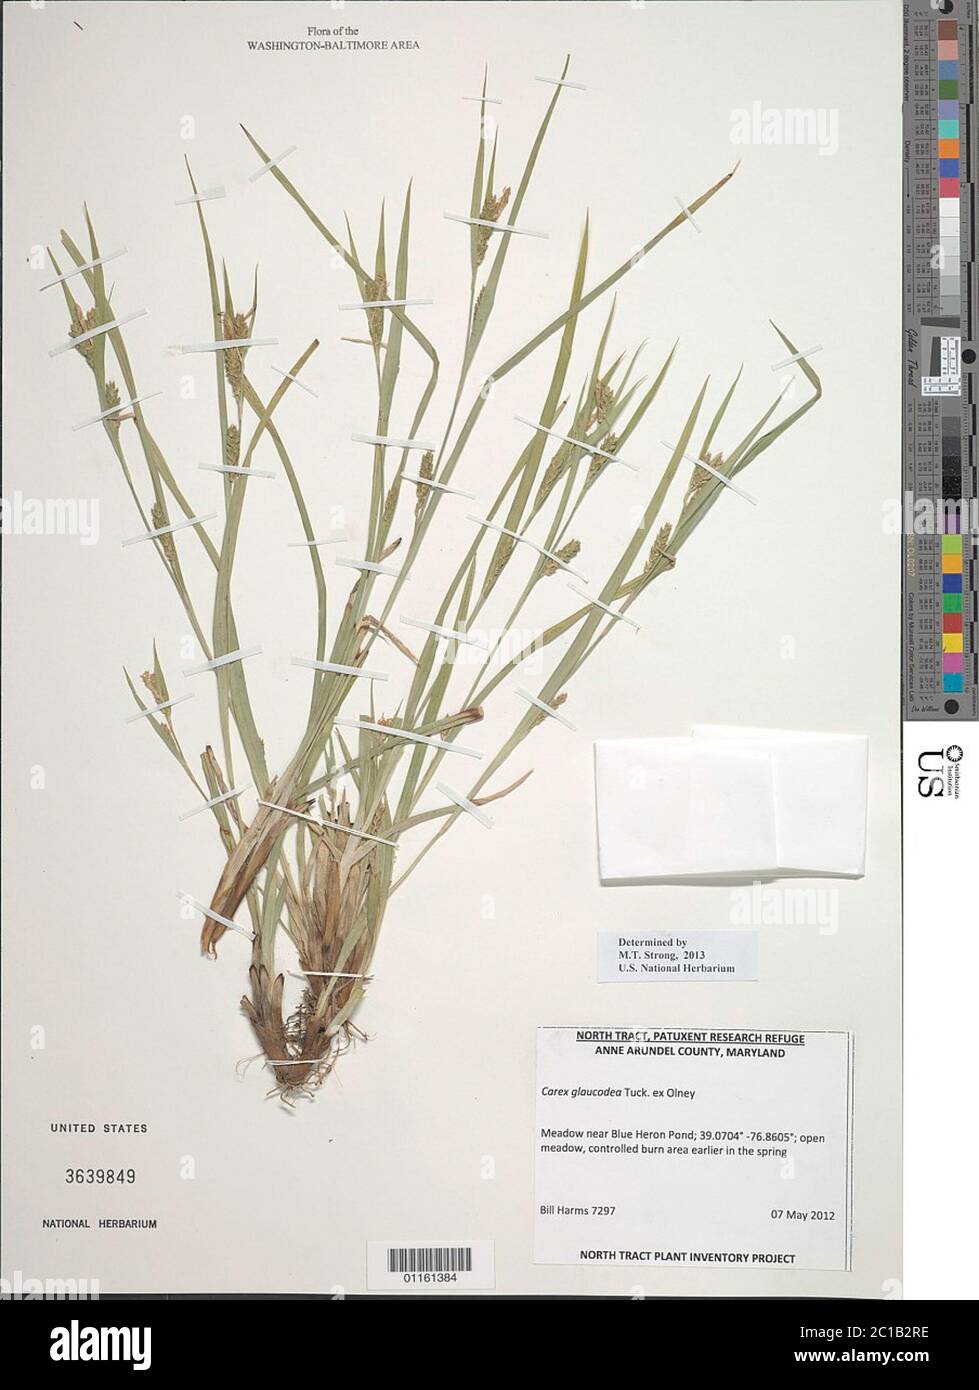 Carex glaucodea Tuck ex Olney Carex glaucodea Tuck ex Olney. Stock Photo